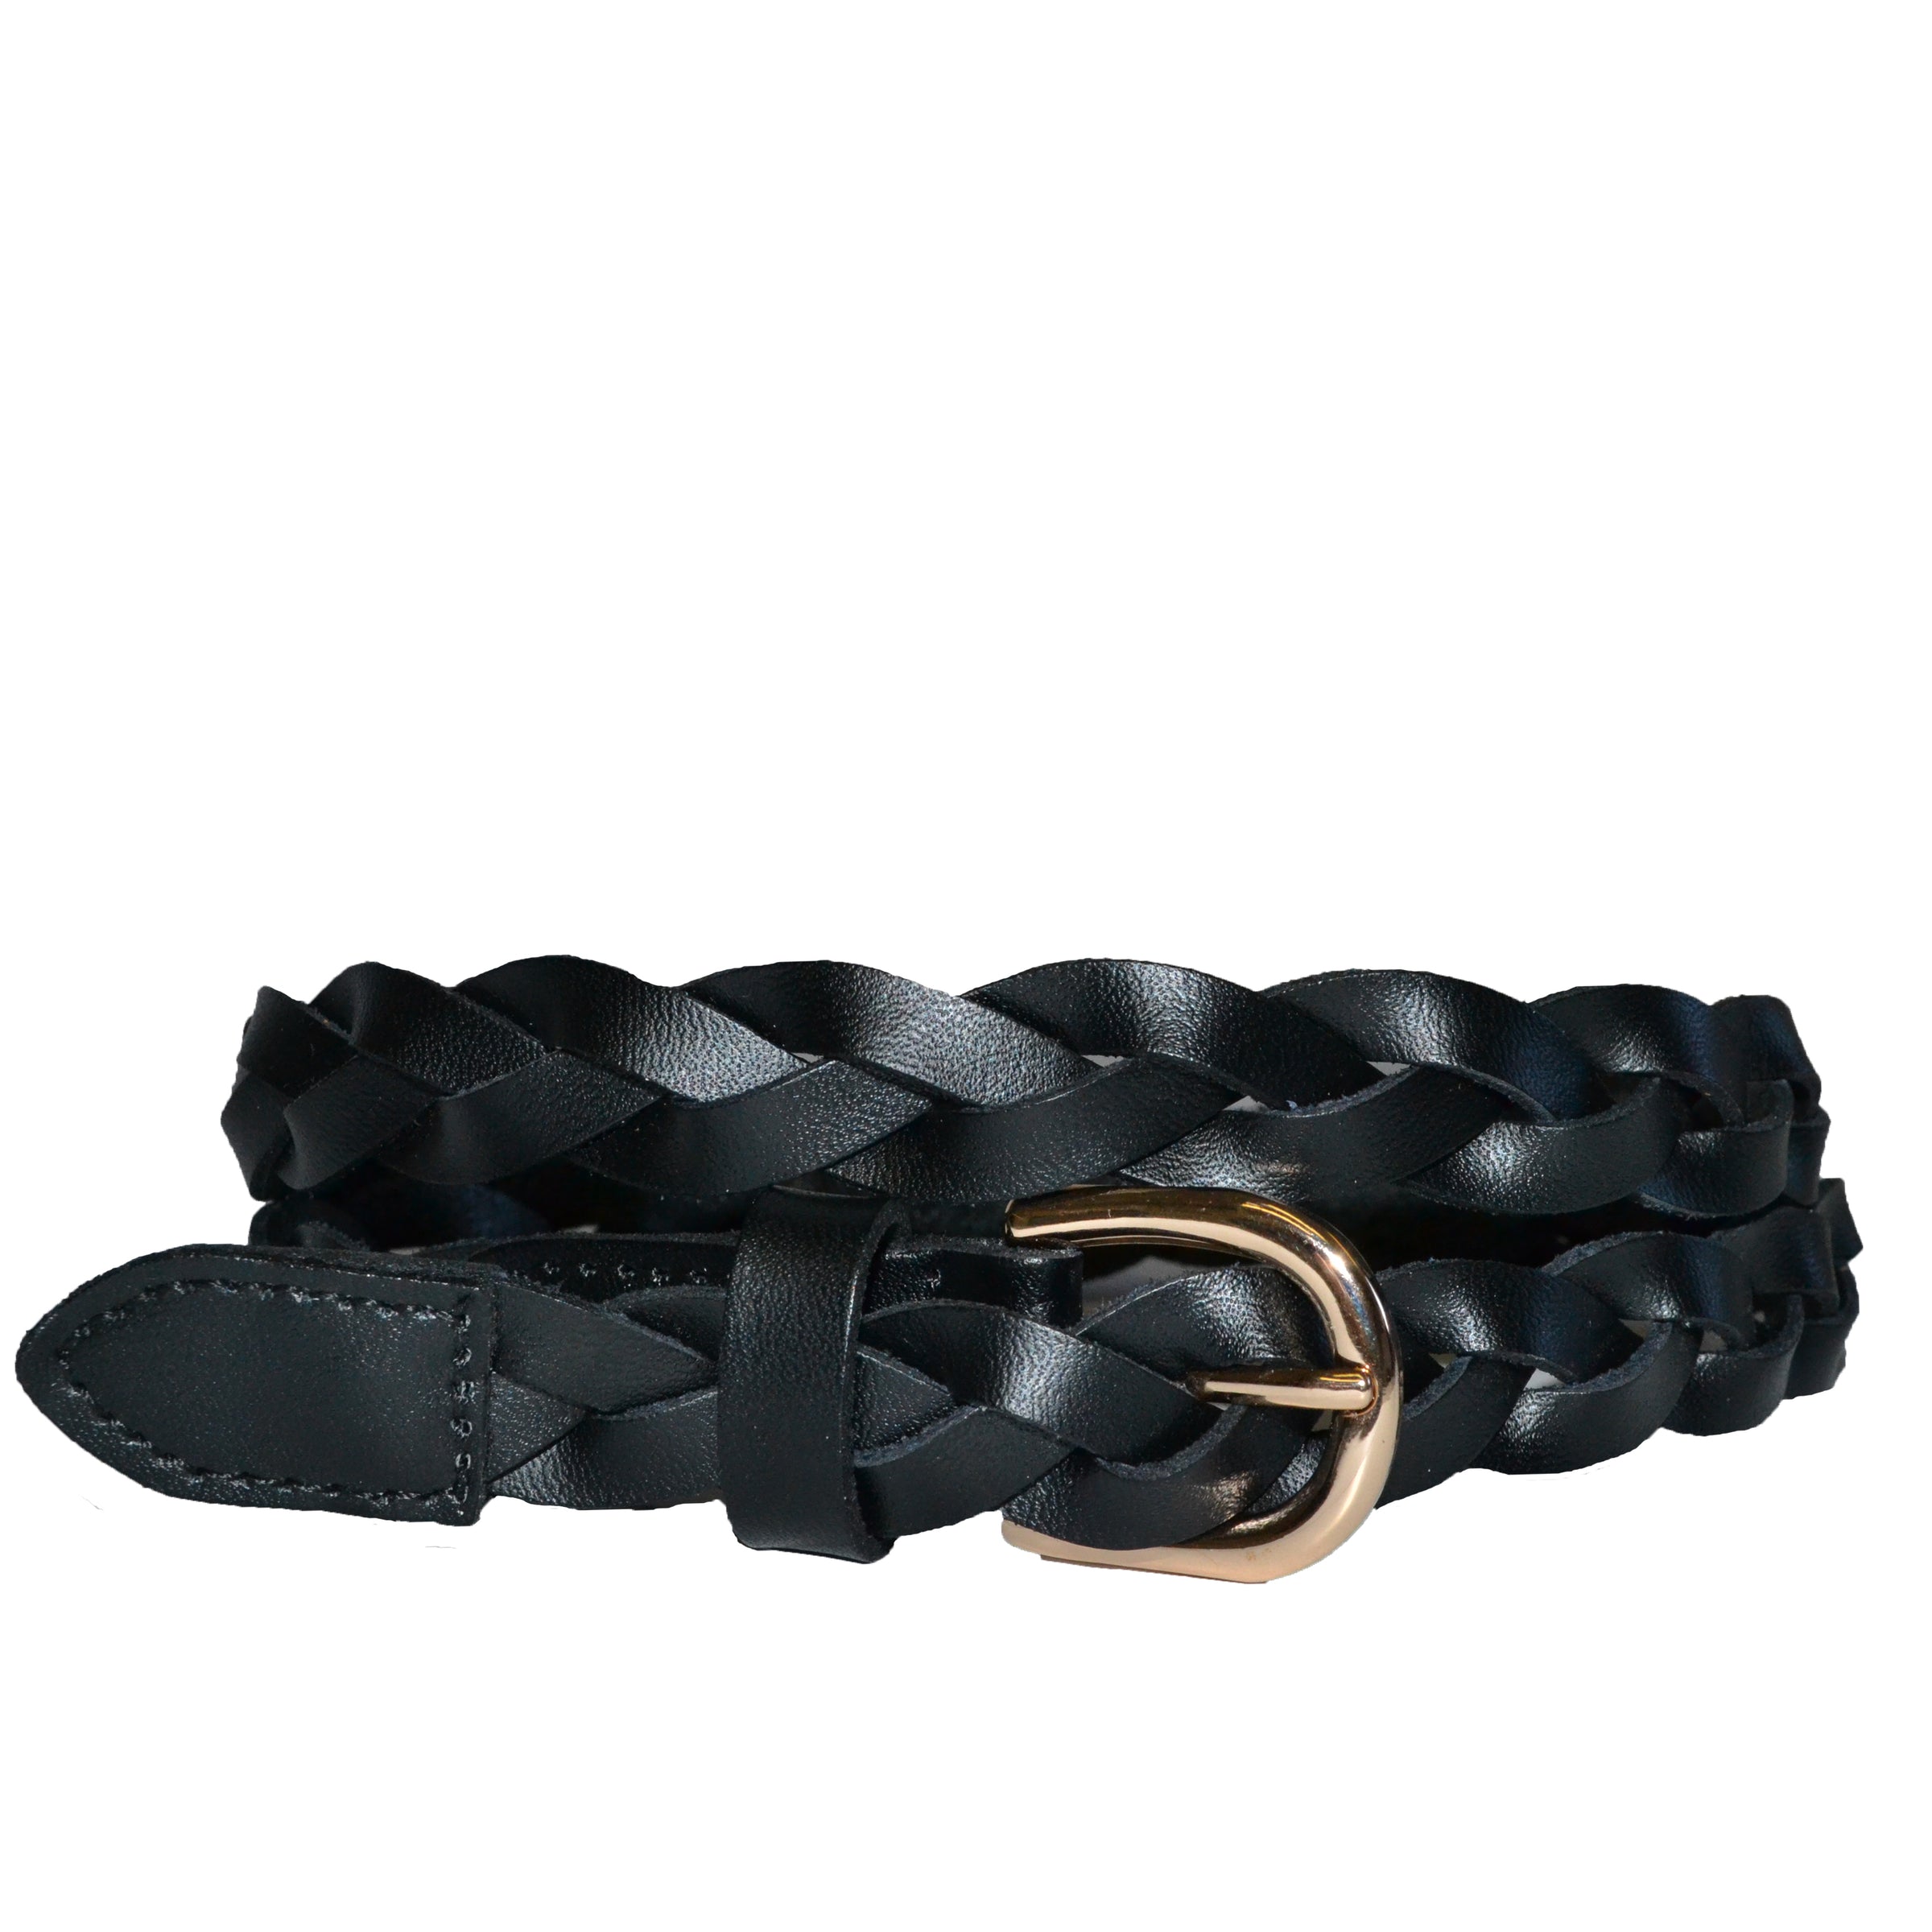 WAVERLY - Black Skinny Leather Plaited Belt with Gold Buckle Belts Addison Road